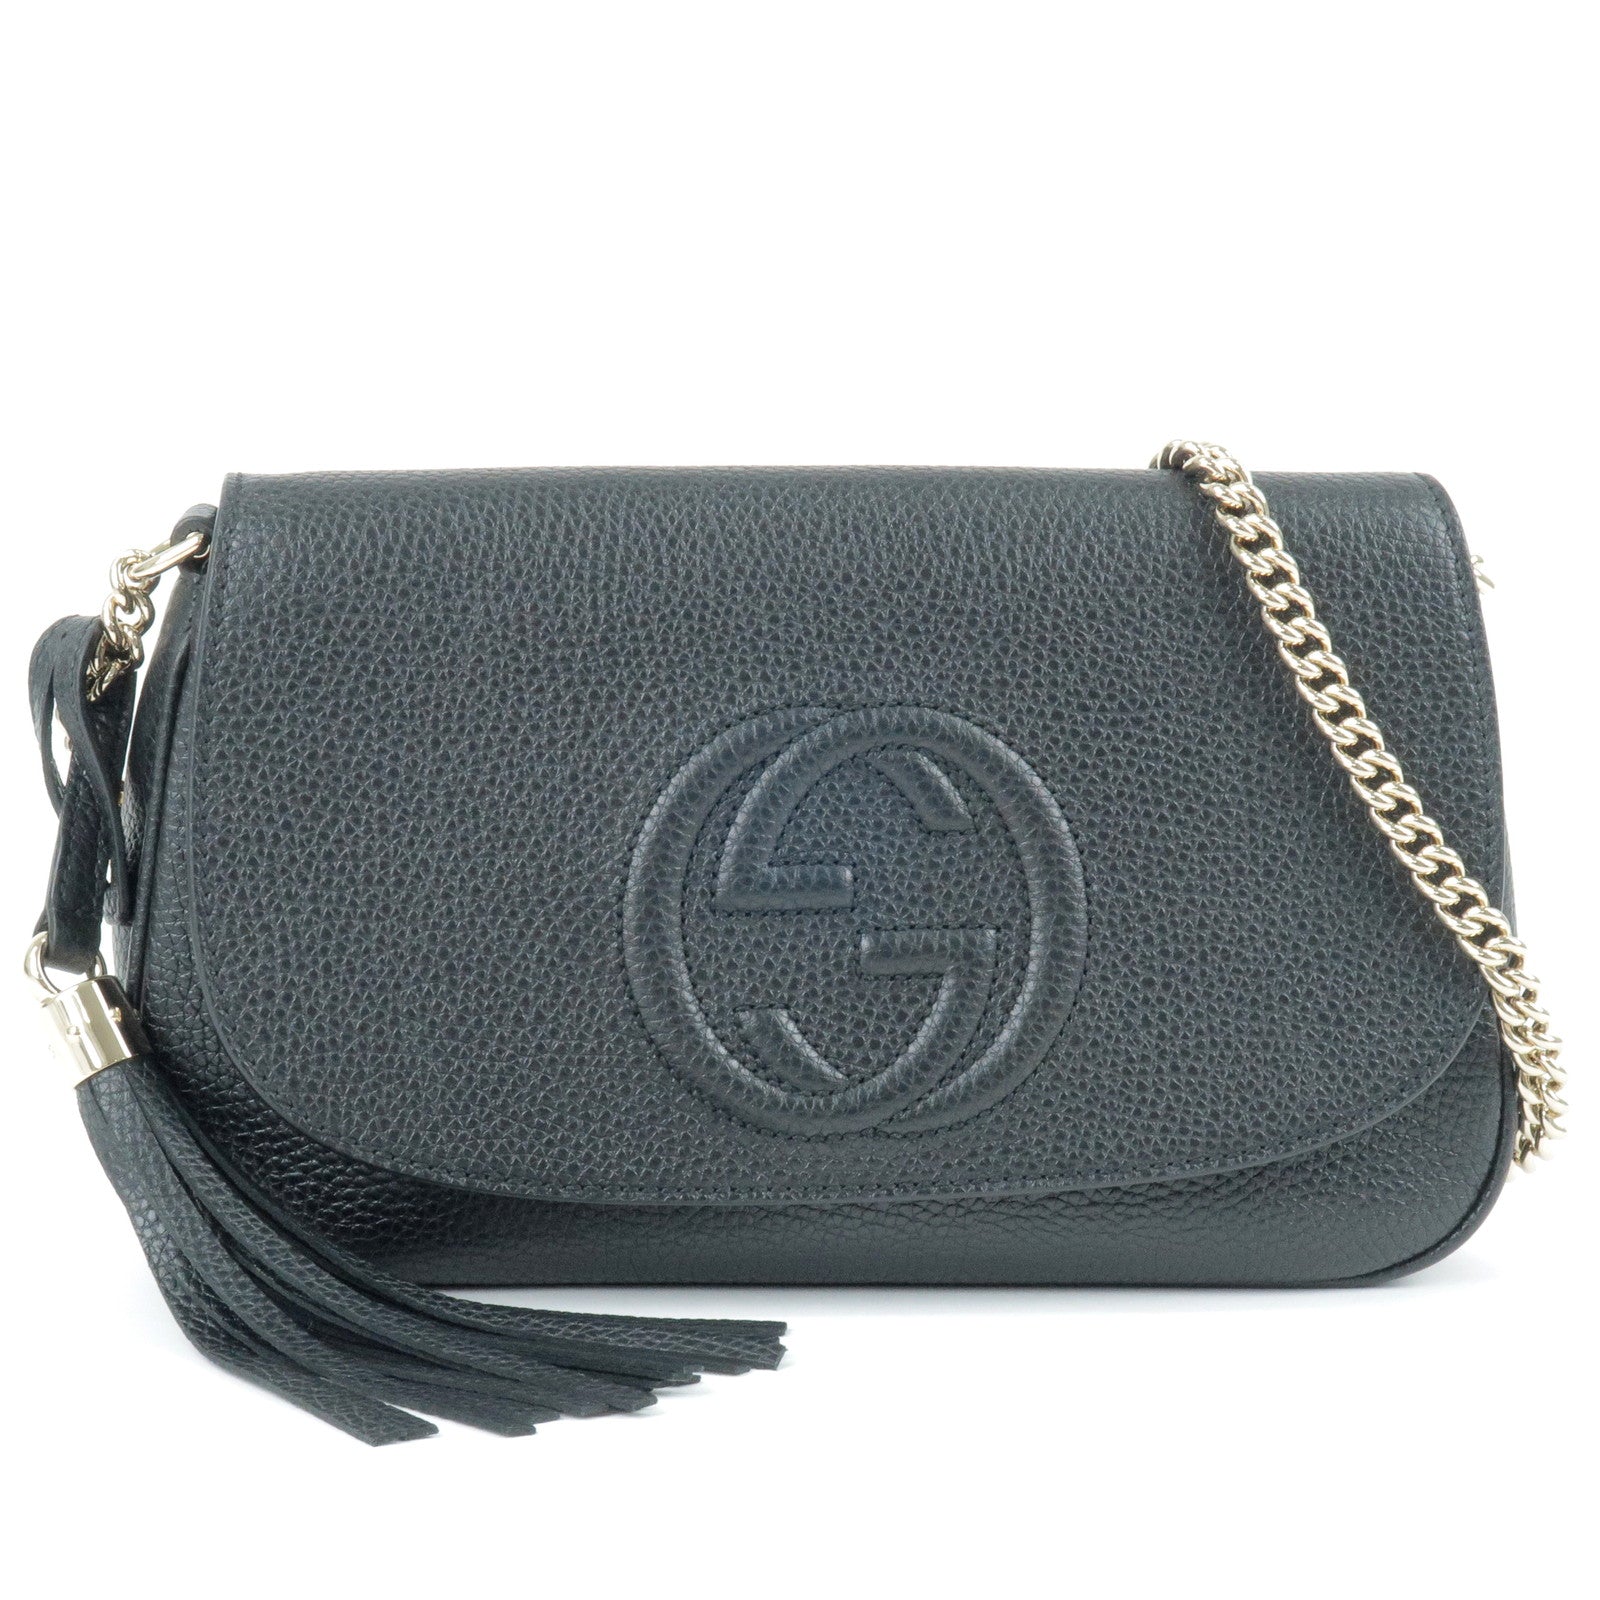 GUCCI-SOHO-Logo-Leather-Chain-Shoulder-Bag-Black-536224